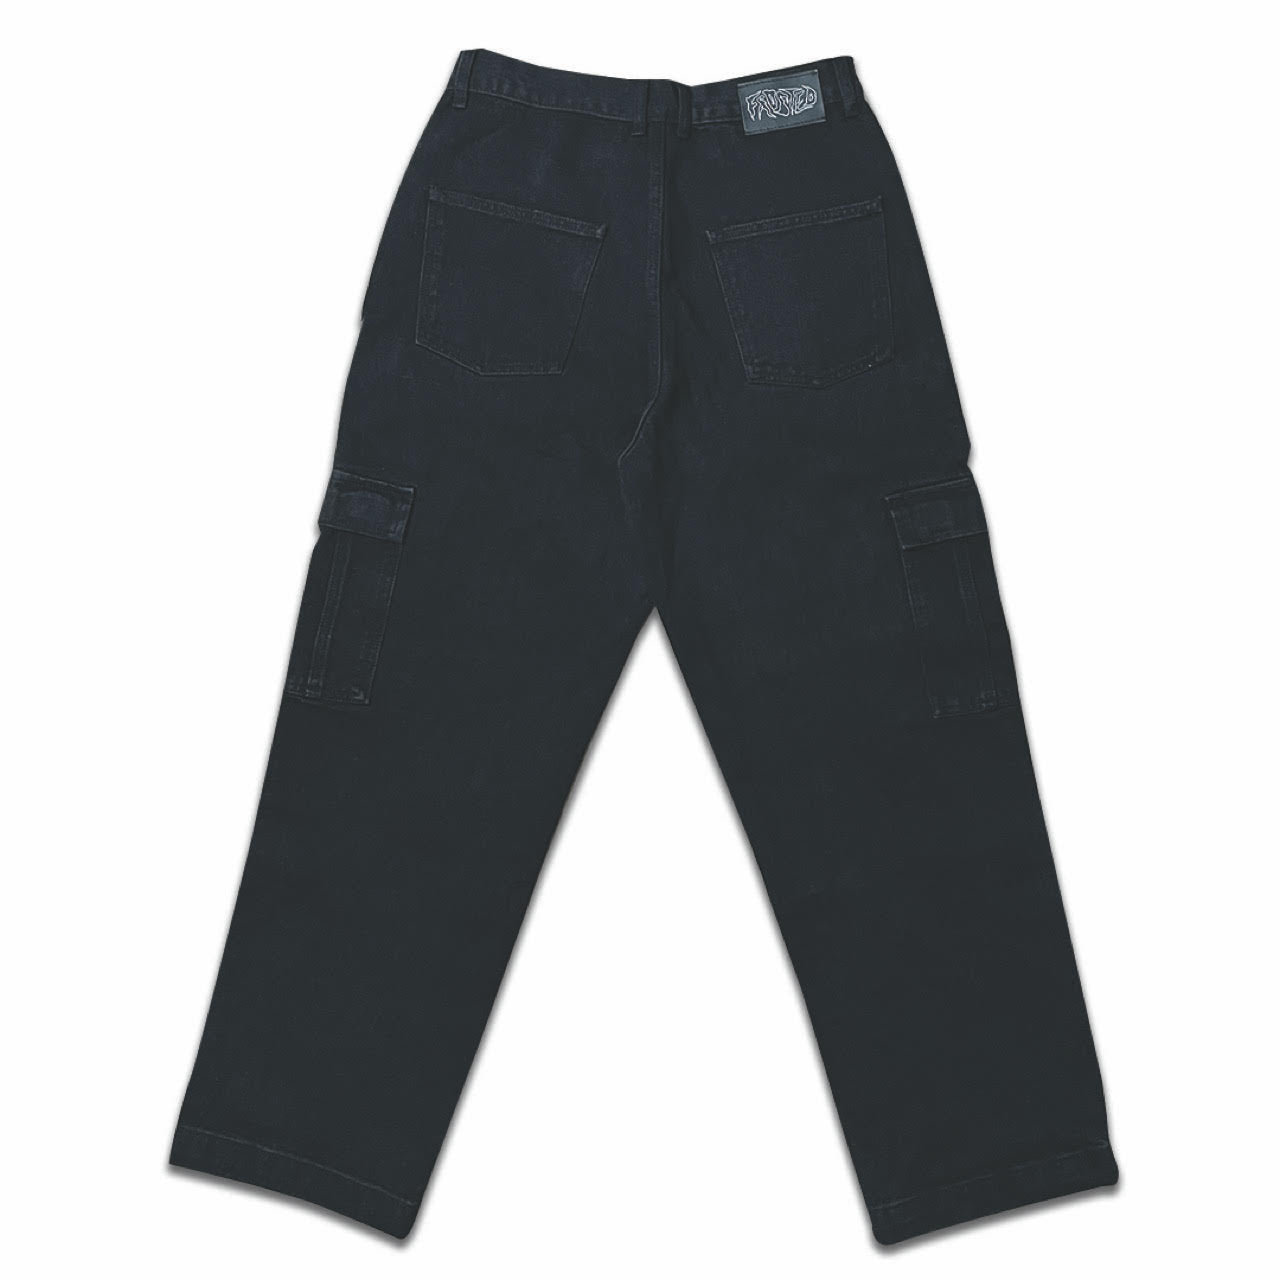 Black Cargo Jeans